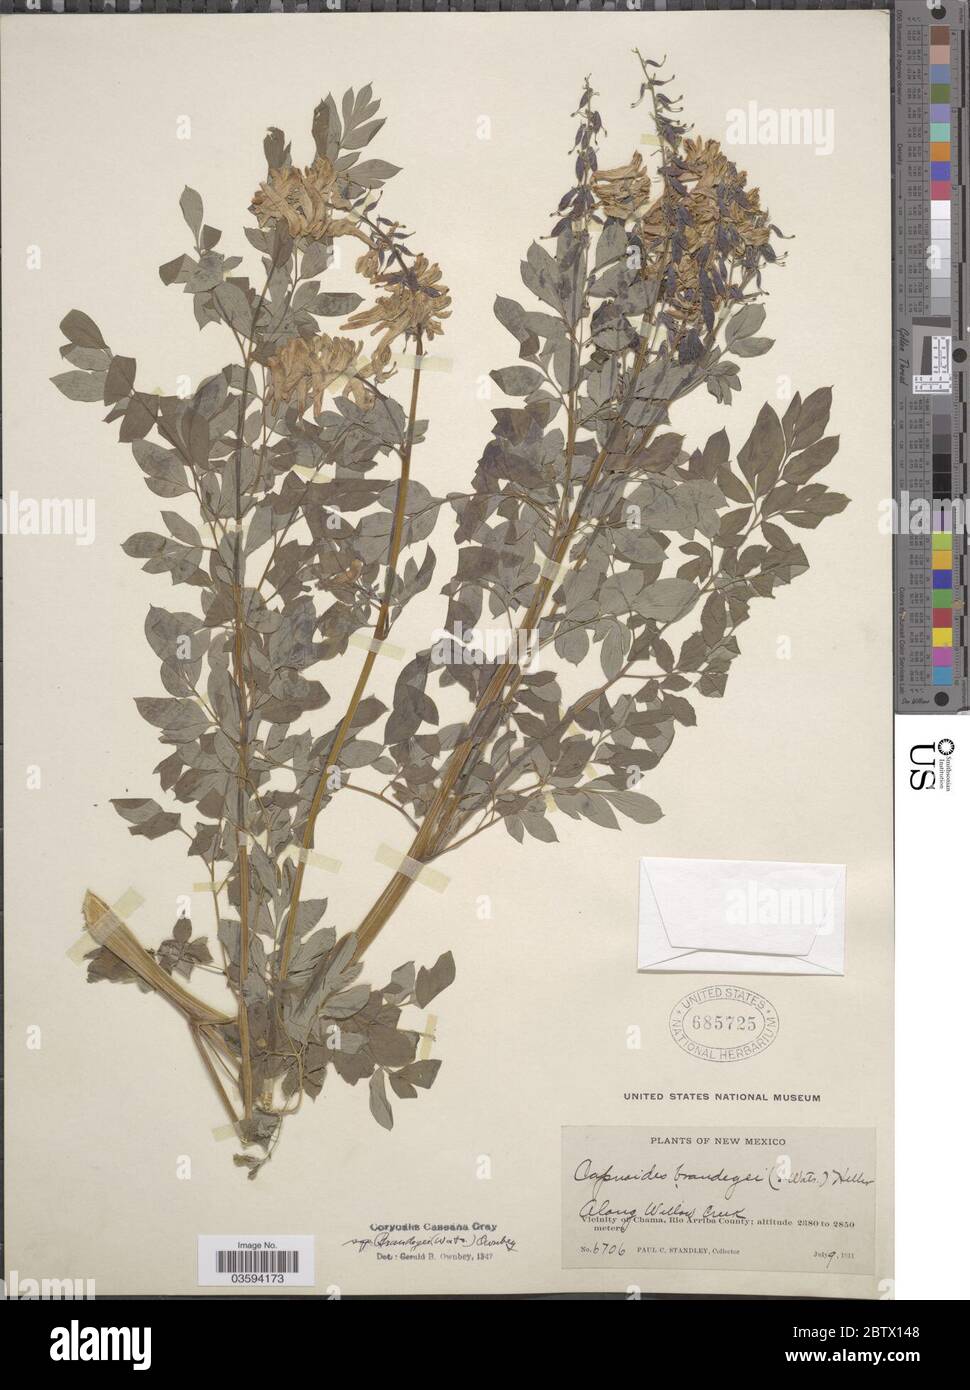 Corydalis caseana subsp brandegeei S Watson GB Ownbey. Stock Photo